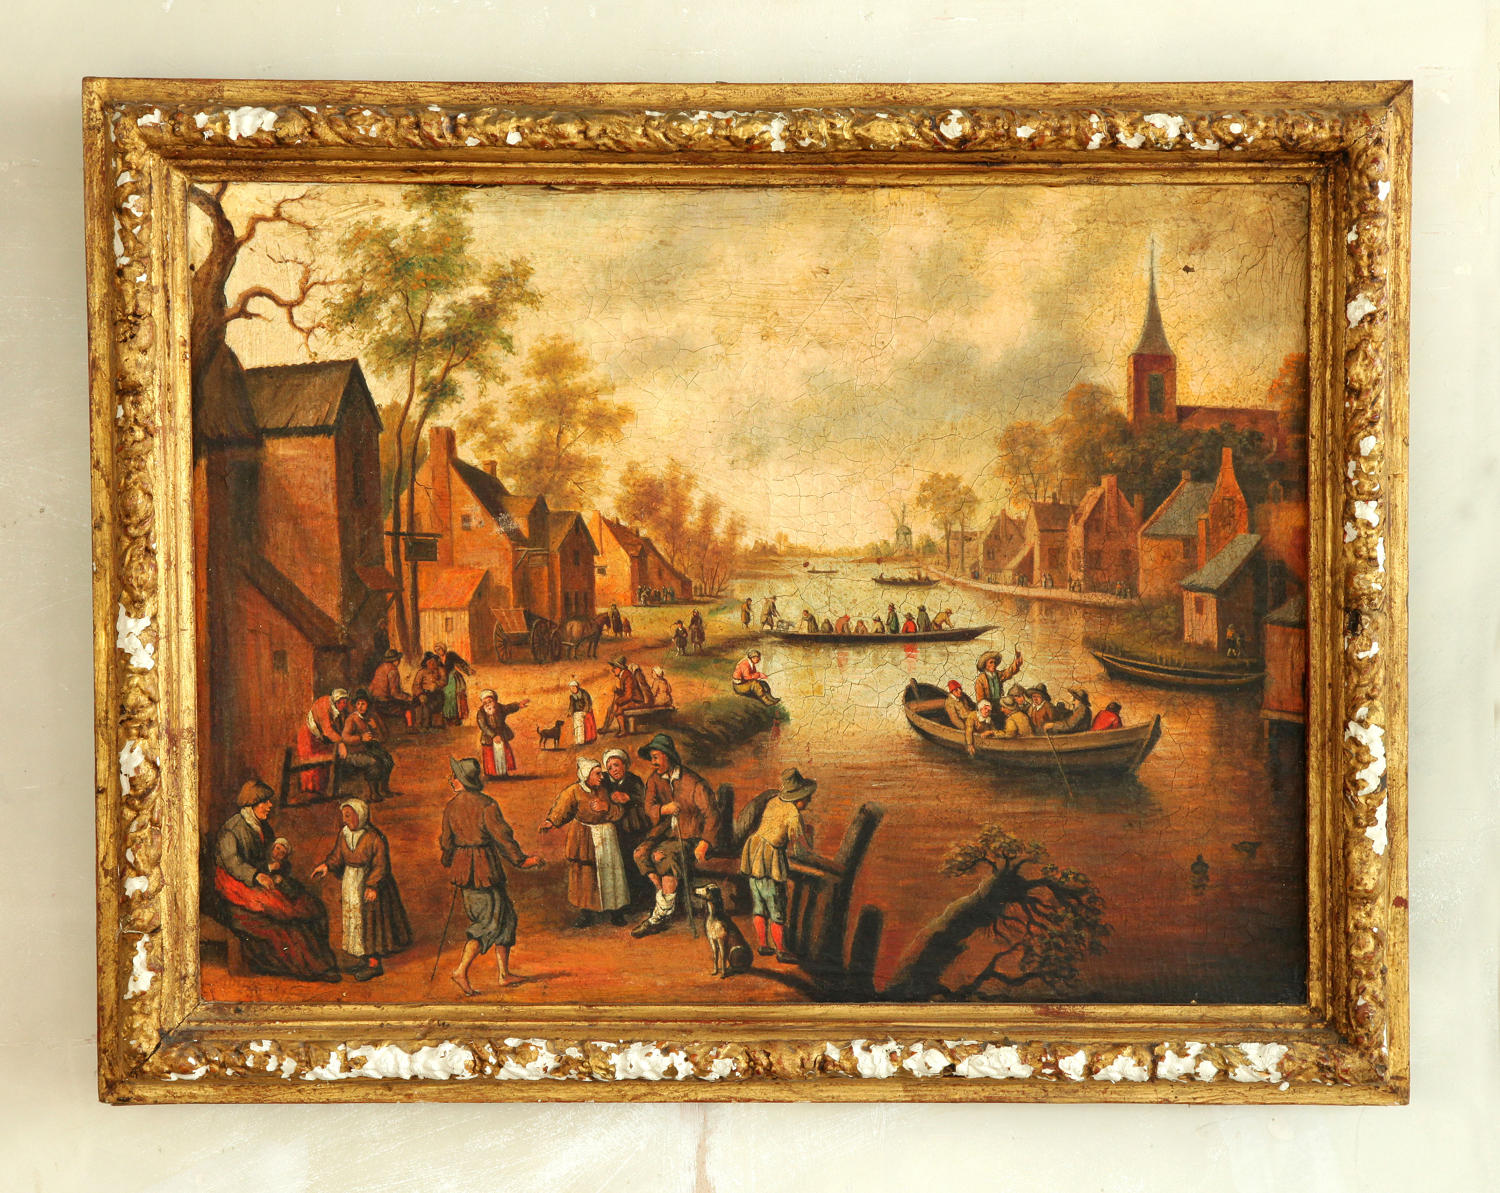 Canal scene after Pieter Breugel